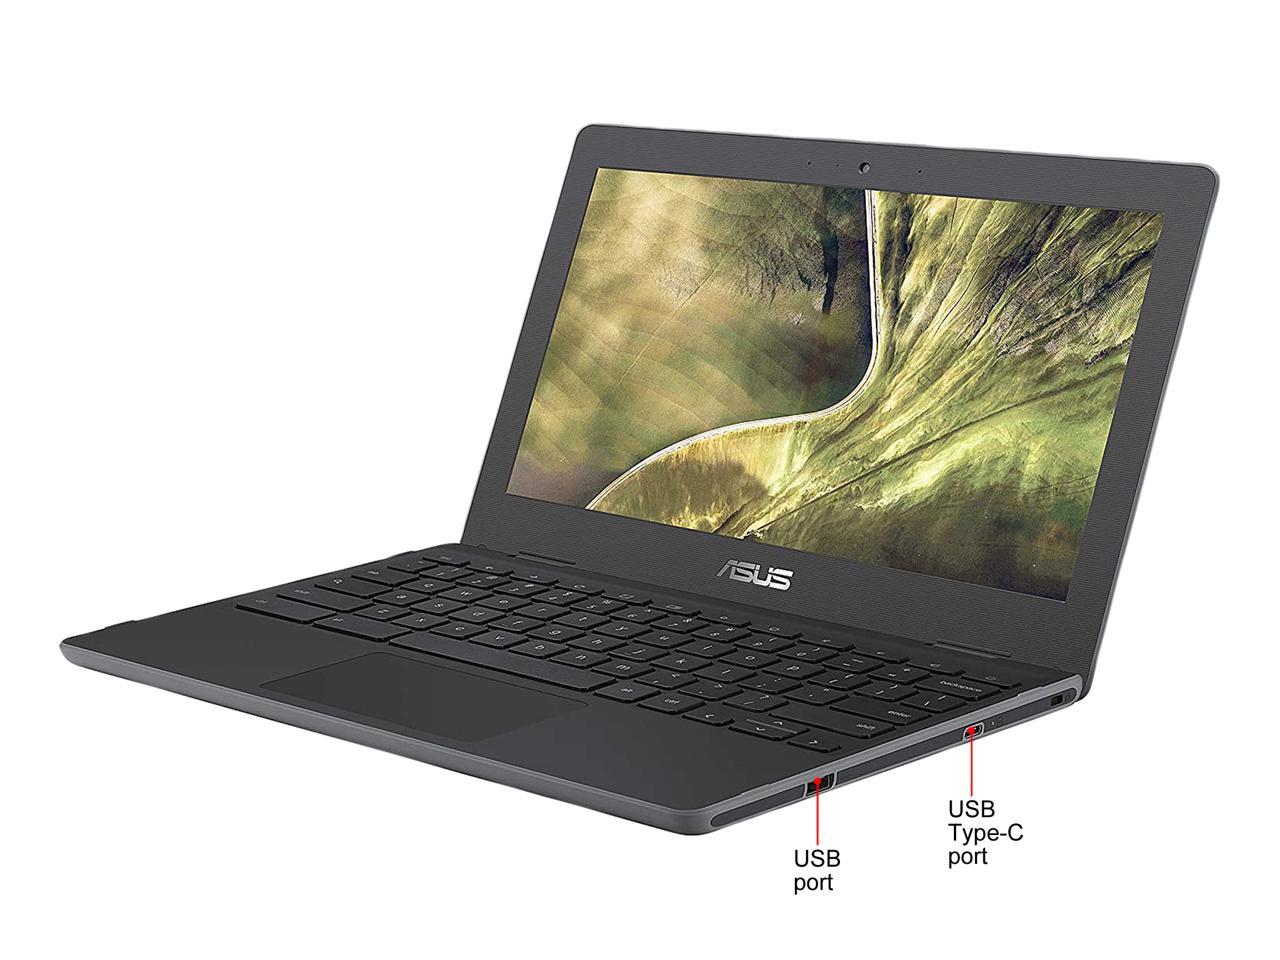 ASUS C204EE YS01 Chromebook Intel Celeron N4000 (1.10 GHz) 4 GB Memory 16 GB SSD 11.6" Chrome OS